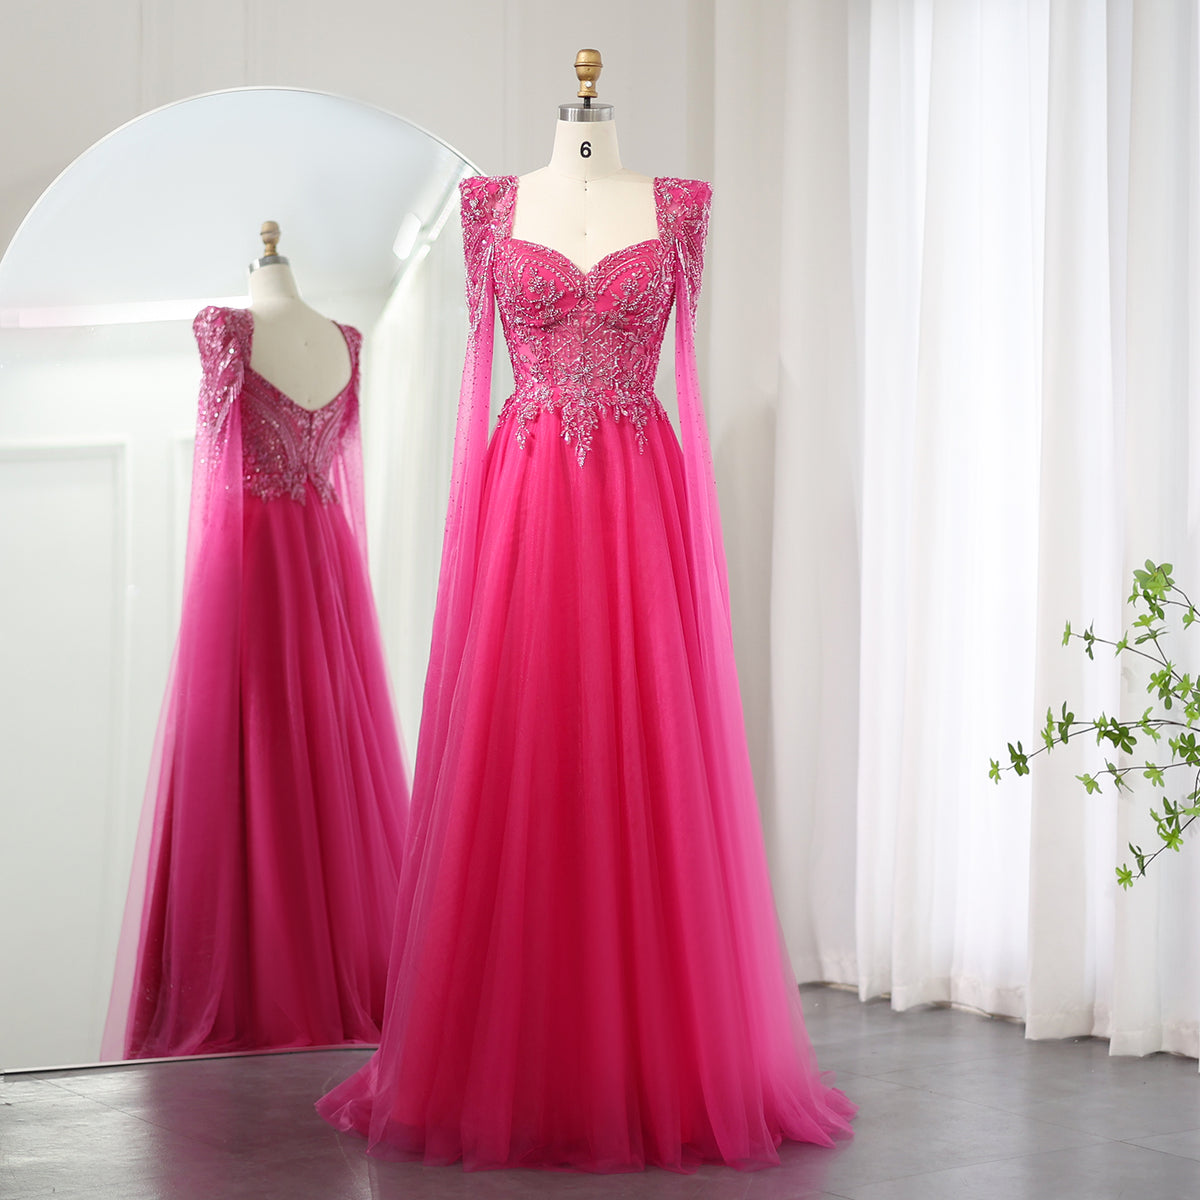 Sharon Said Arabic Fuchsia Evening Dress with Cape Sleeves Luxury Beaded Dubai Elegant Women Wedding Formal Party Gowns SS242